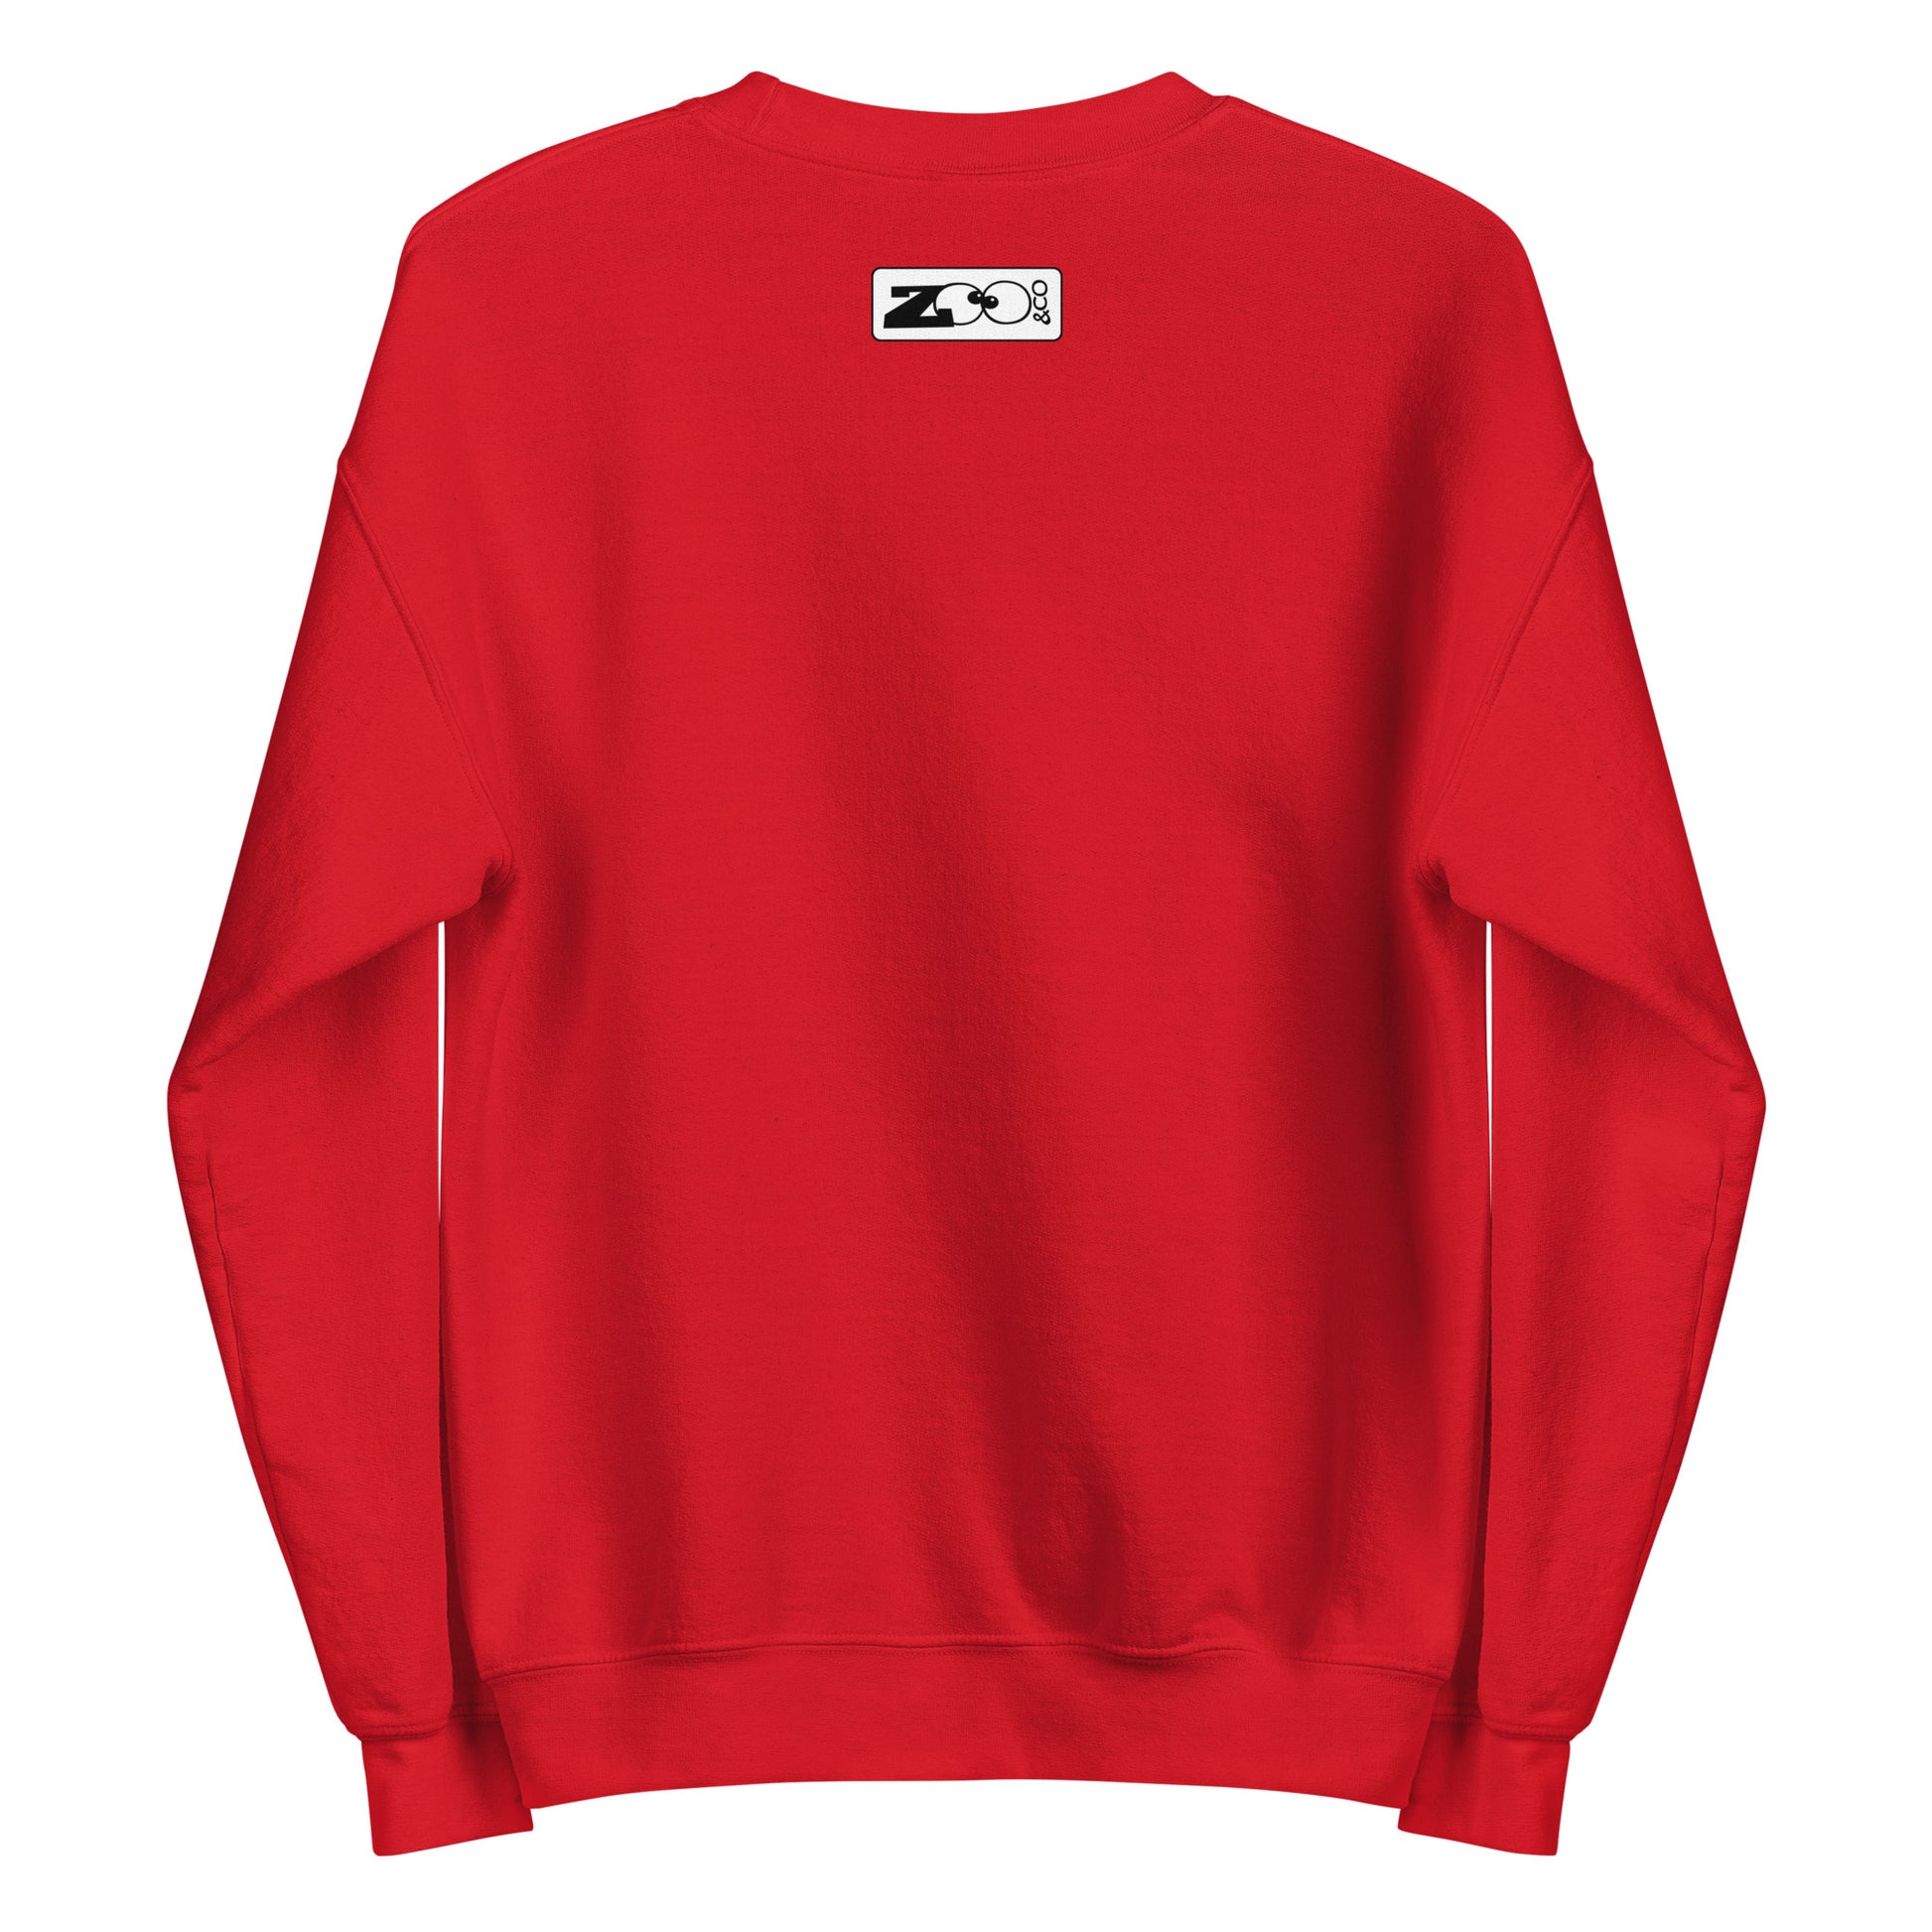 Christmas chameleon ready for the big season - Unisex Sweatshirt. Red. Back view